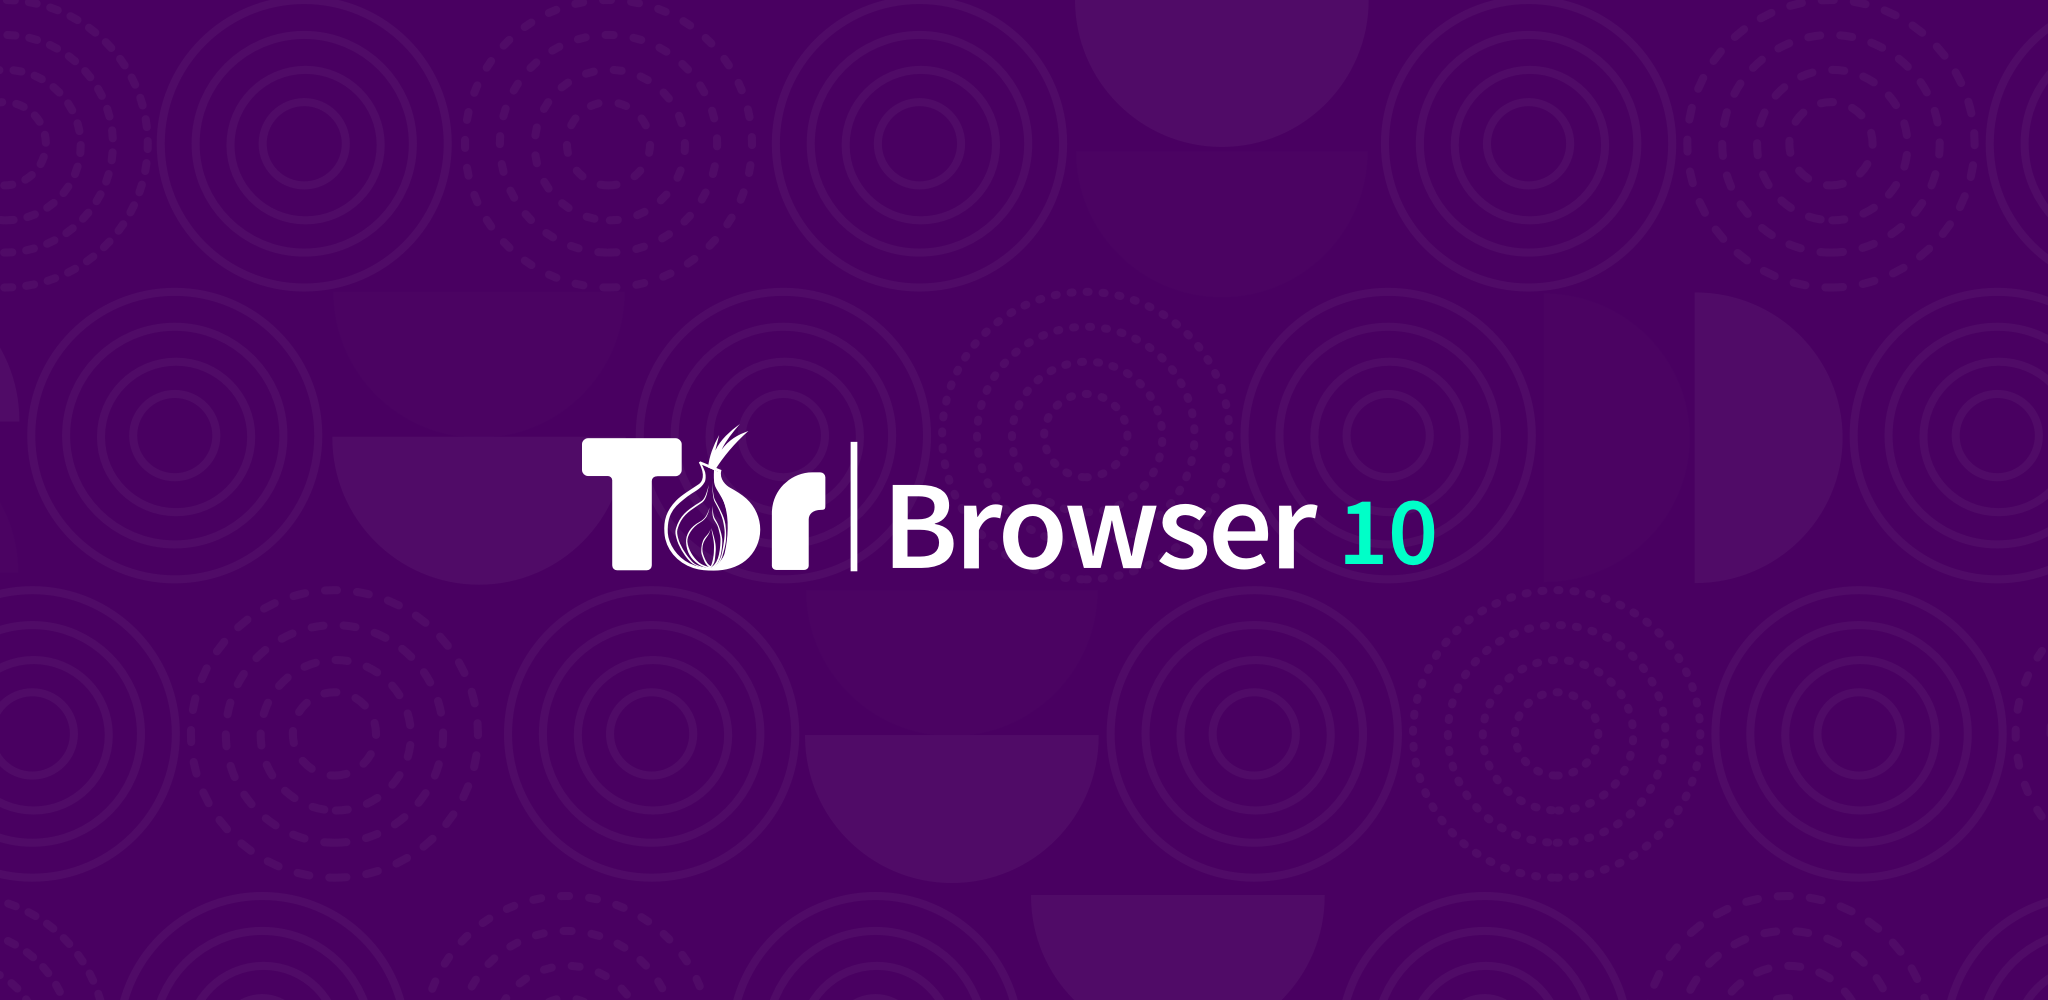 Tor im browser bundle windows mega аналог браузера тор для телефона mega